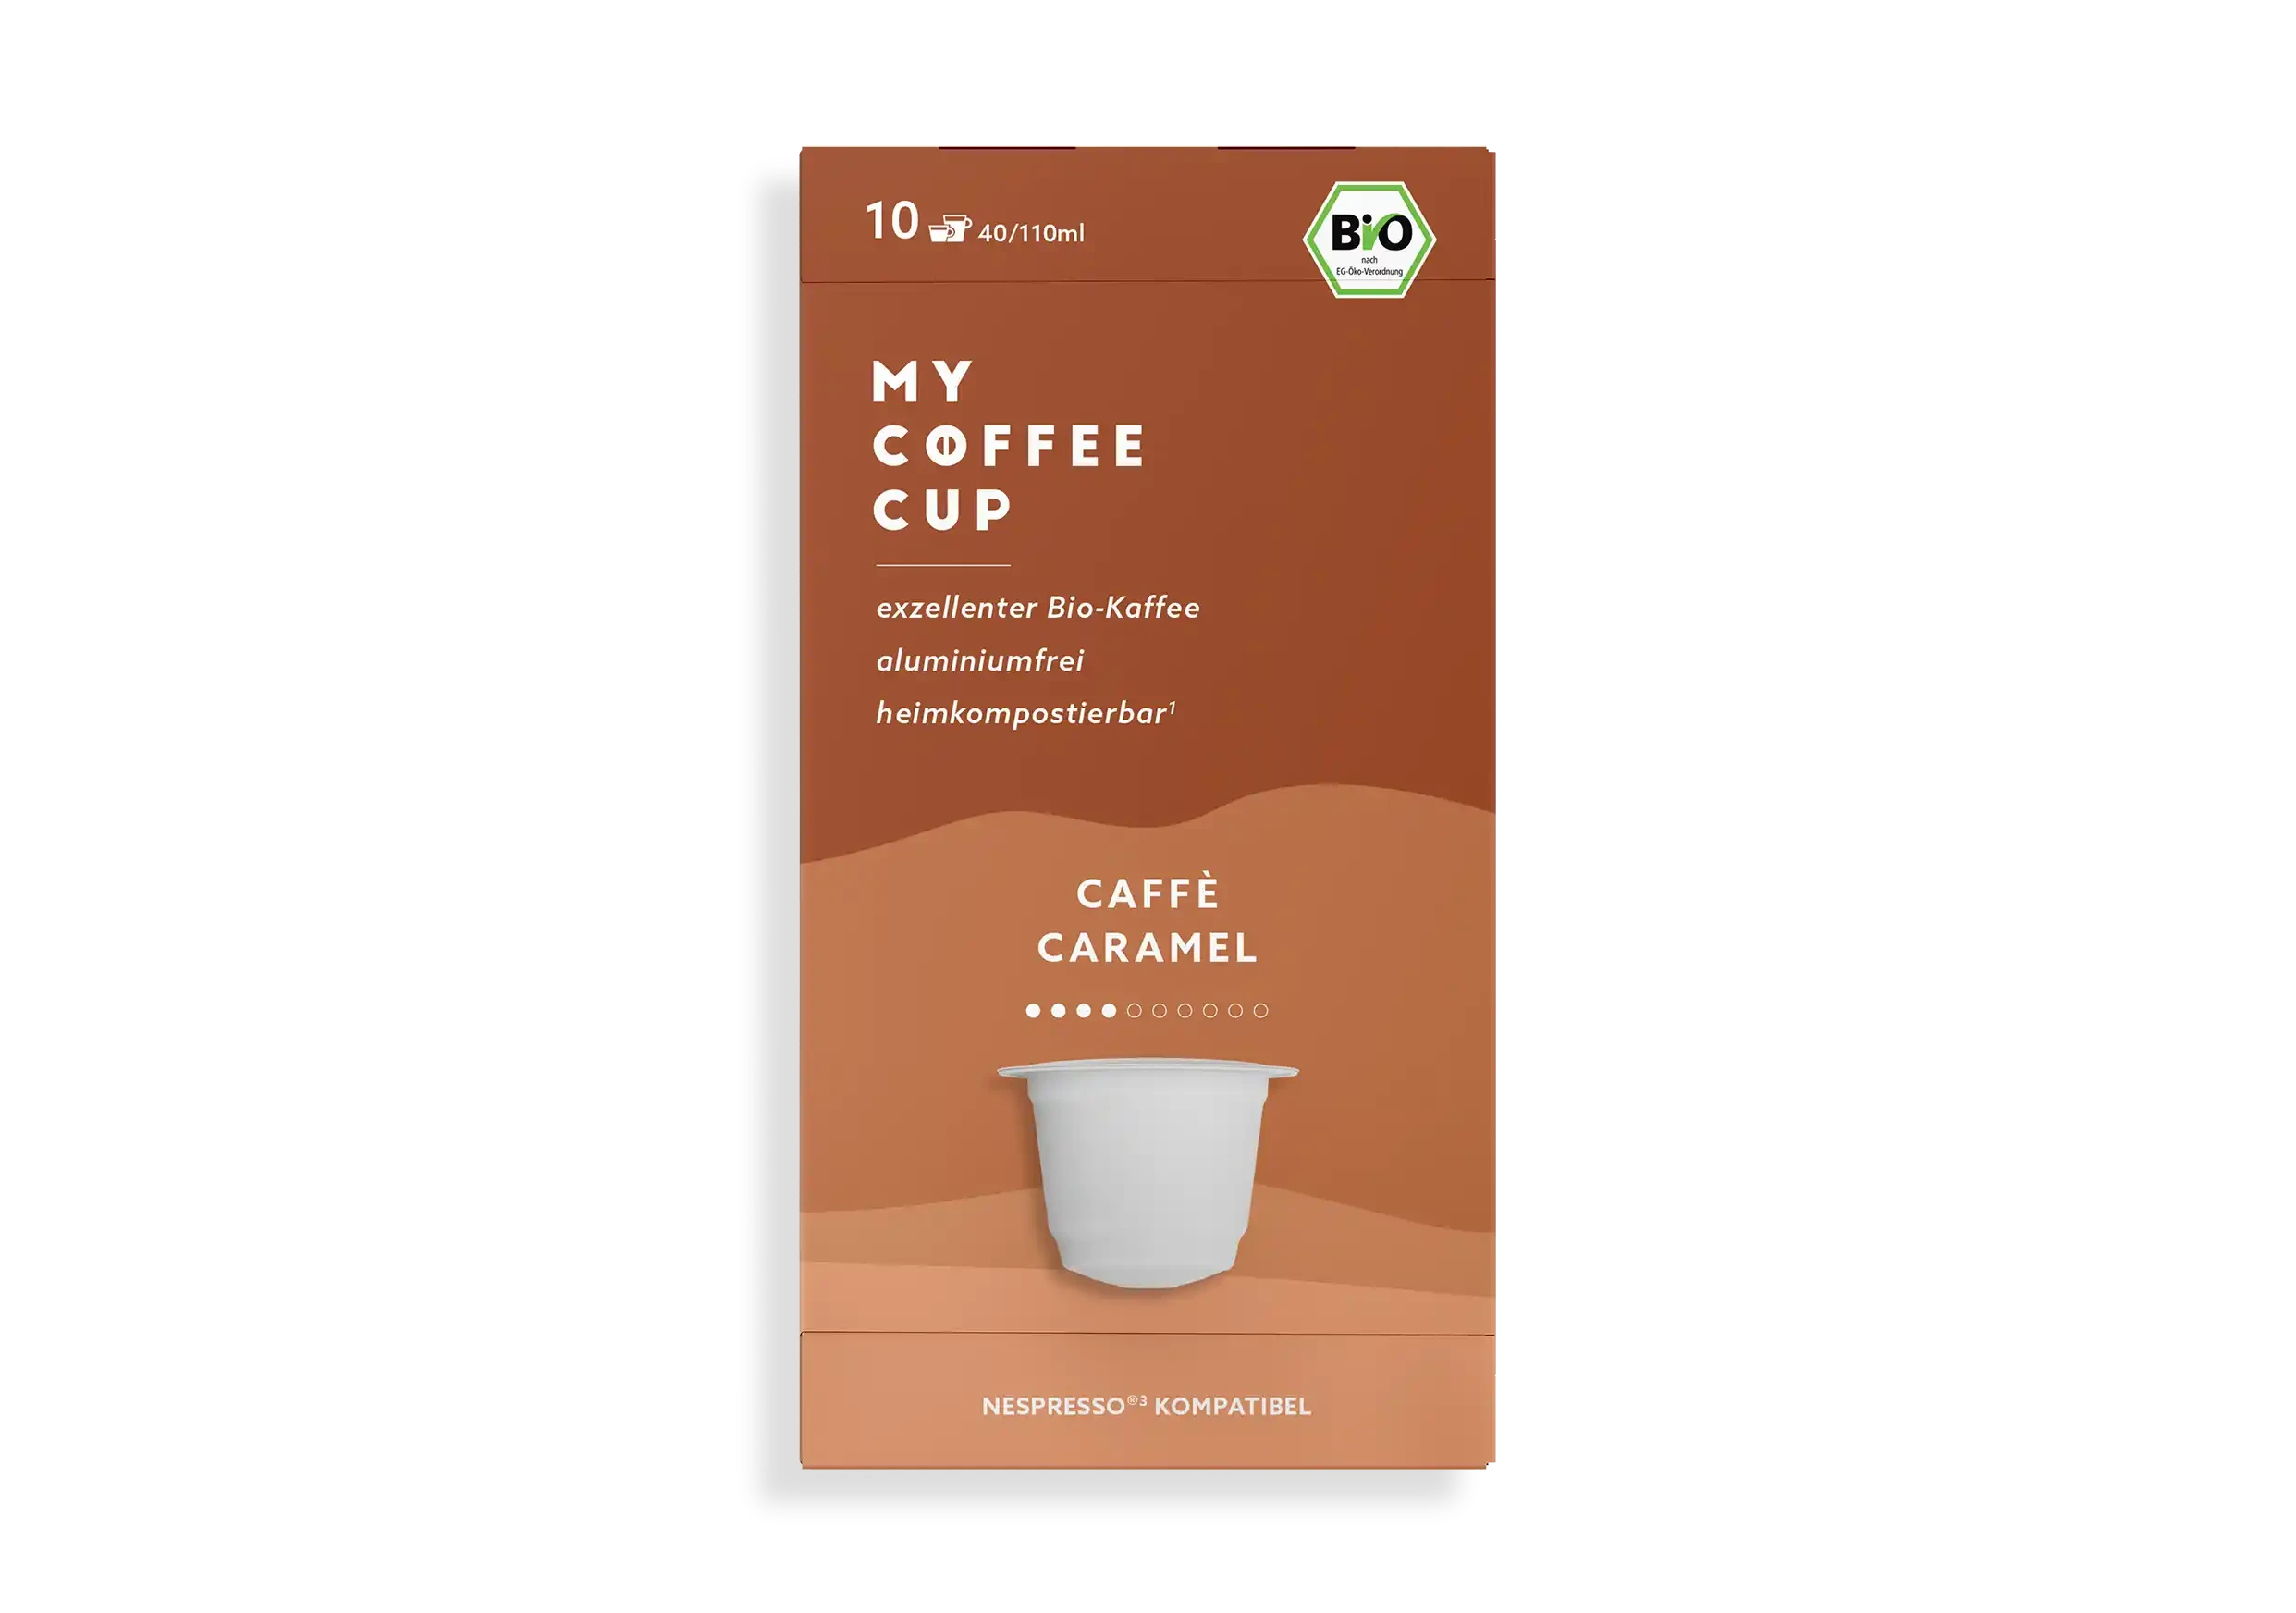 Nespresso kompatible Kapseln - caffe caramel - My-Coffee-Cup.at